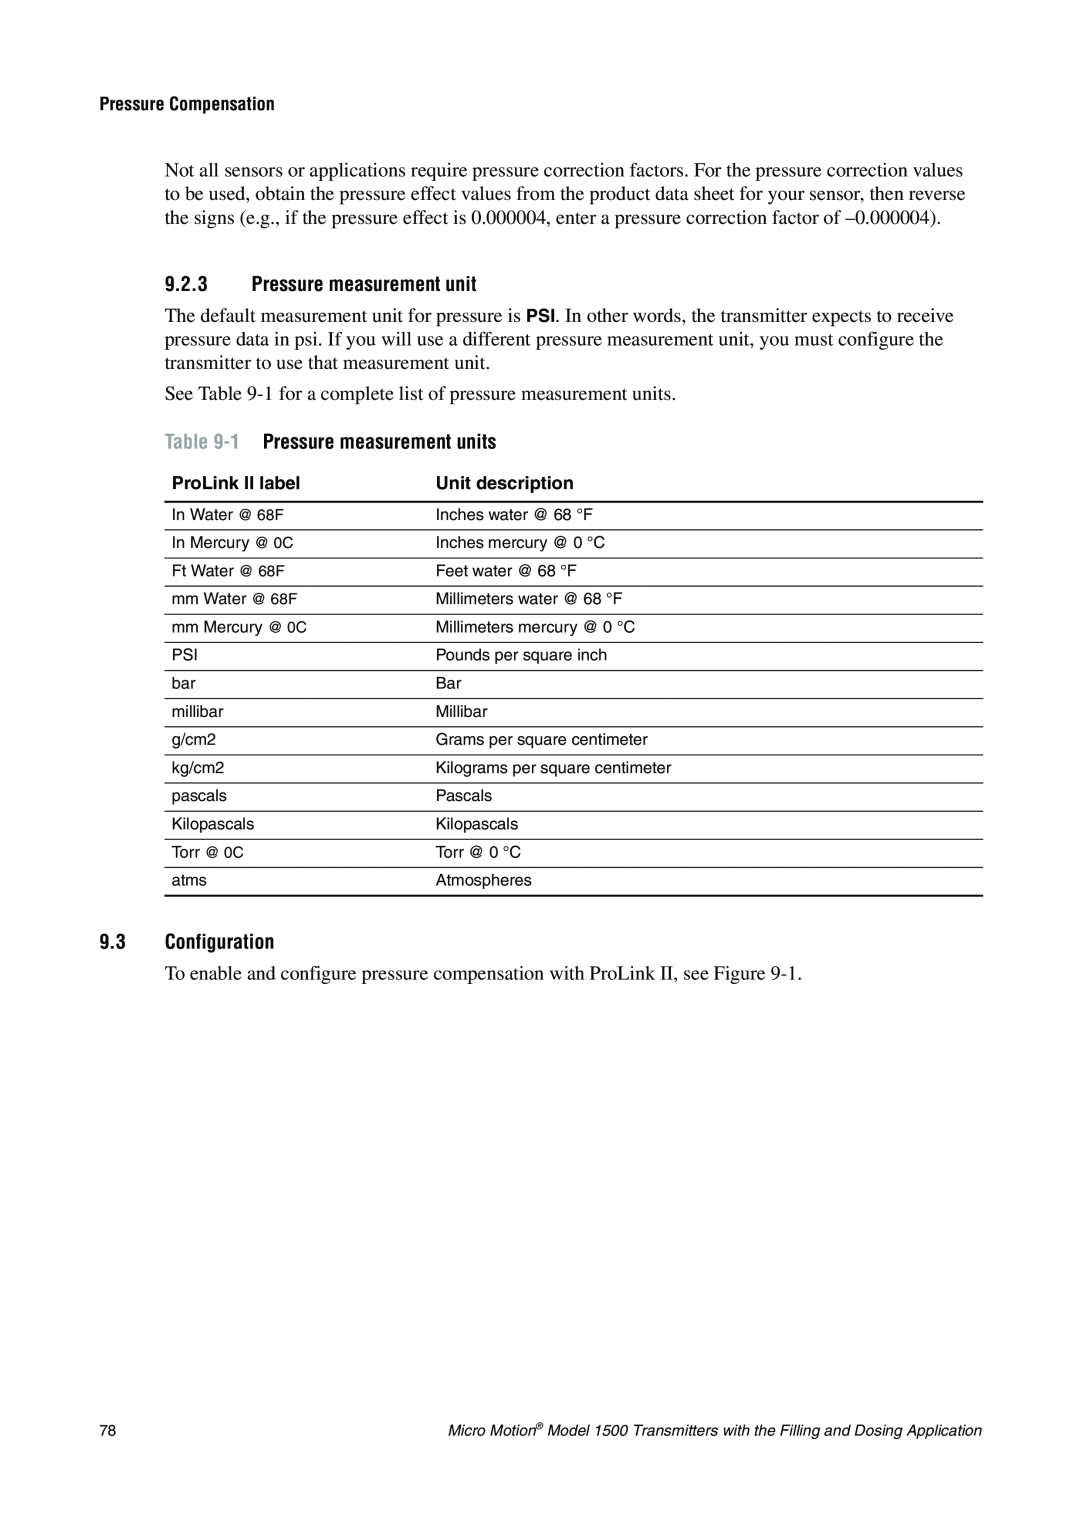 Emerson Process Management 1500 manual 9.2.3Pressure measurement unit, 1 Pressure measurement units, 9.3Configuration 